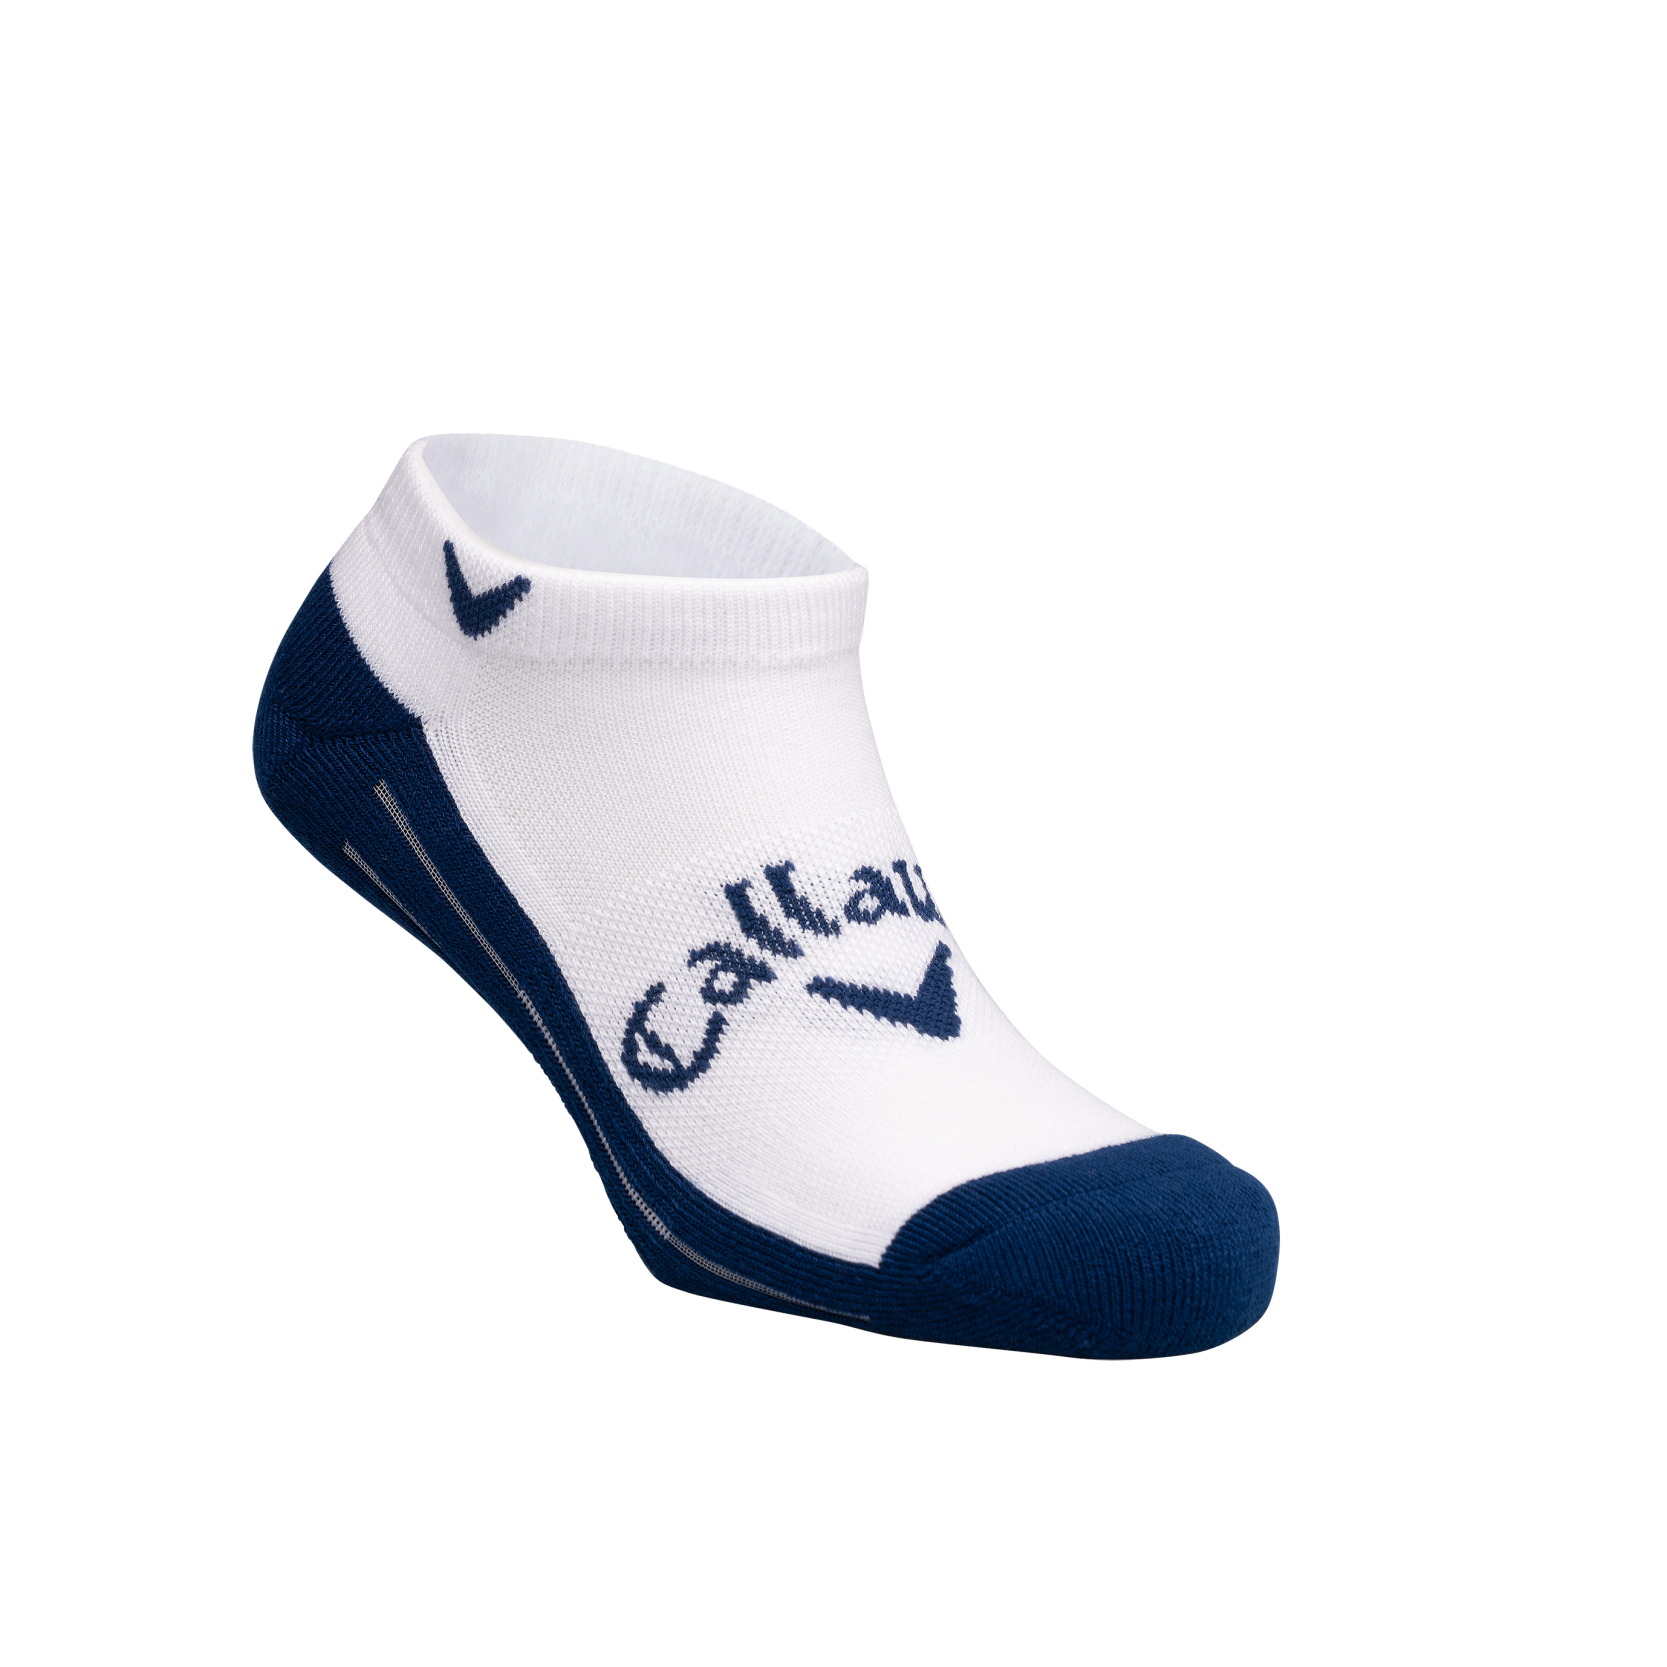 Callaway Tour Opti-Dri Low II pánské golfové ponožky, bílé/tmavě modré, vel. S/M